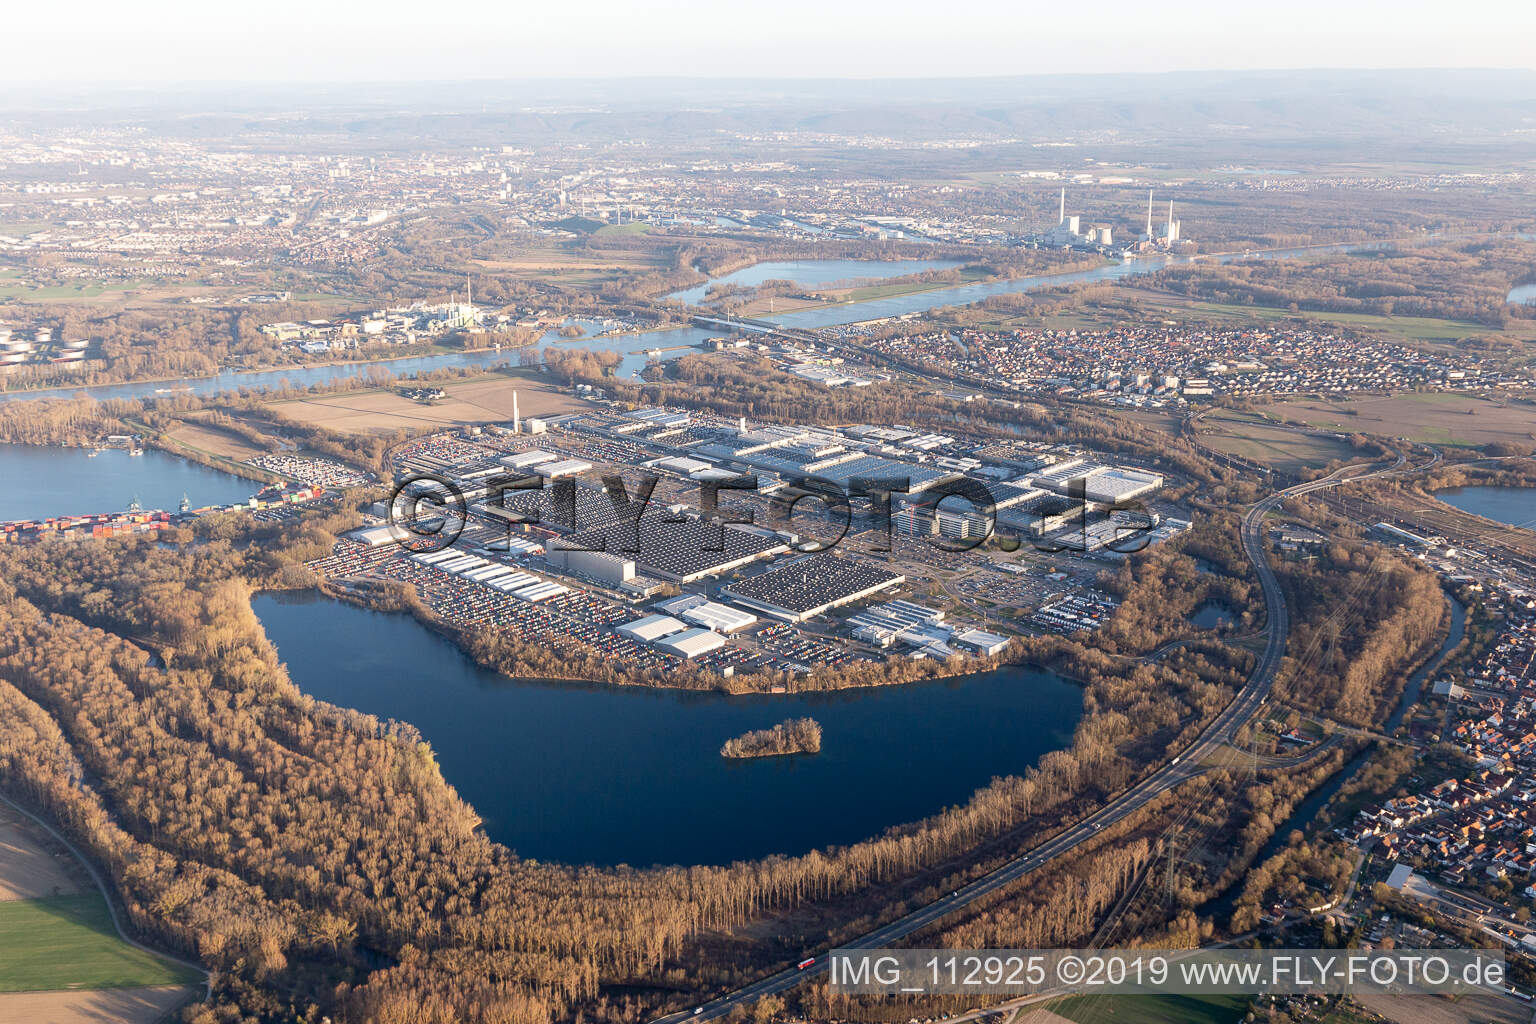 Daimler truck factory in Wörth am Rhein in the state Rhineland-Palatinate, Germany